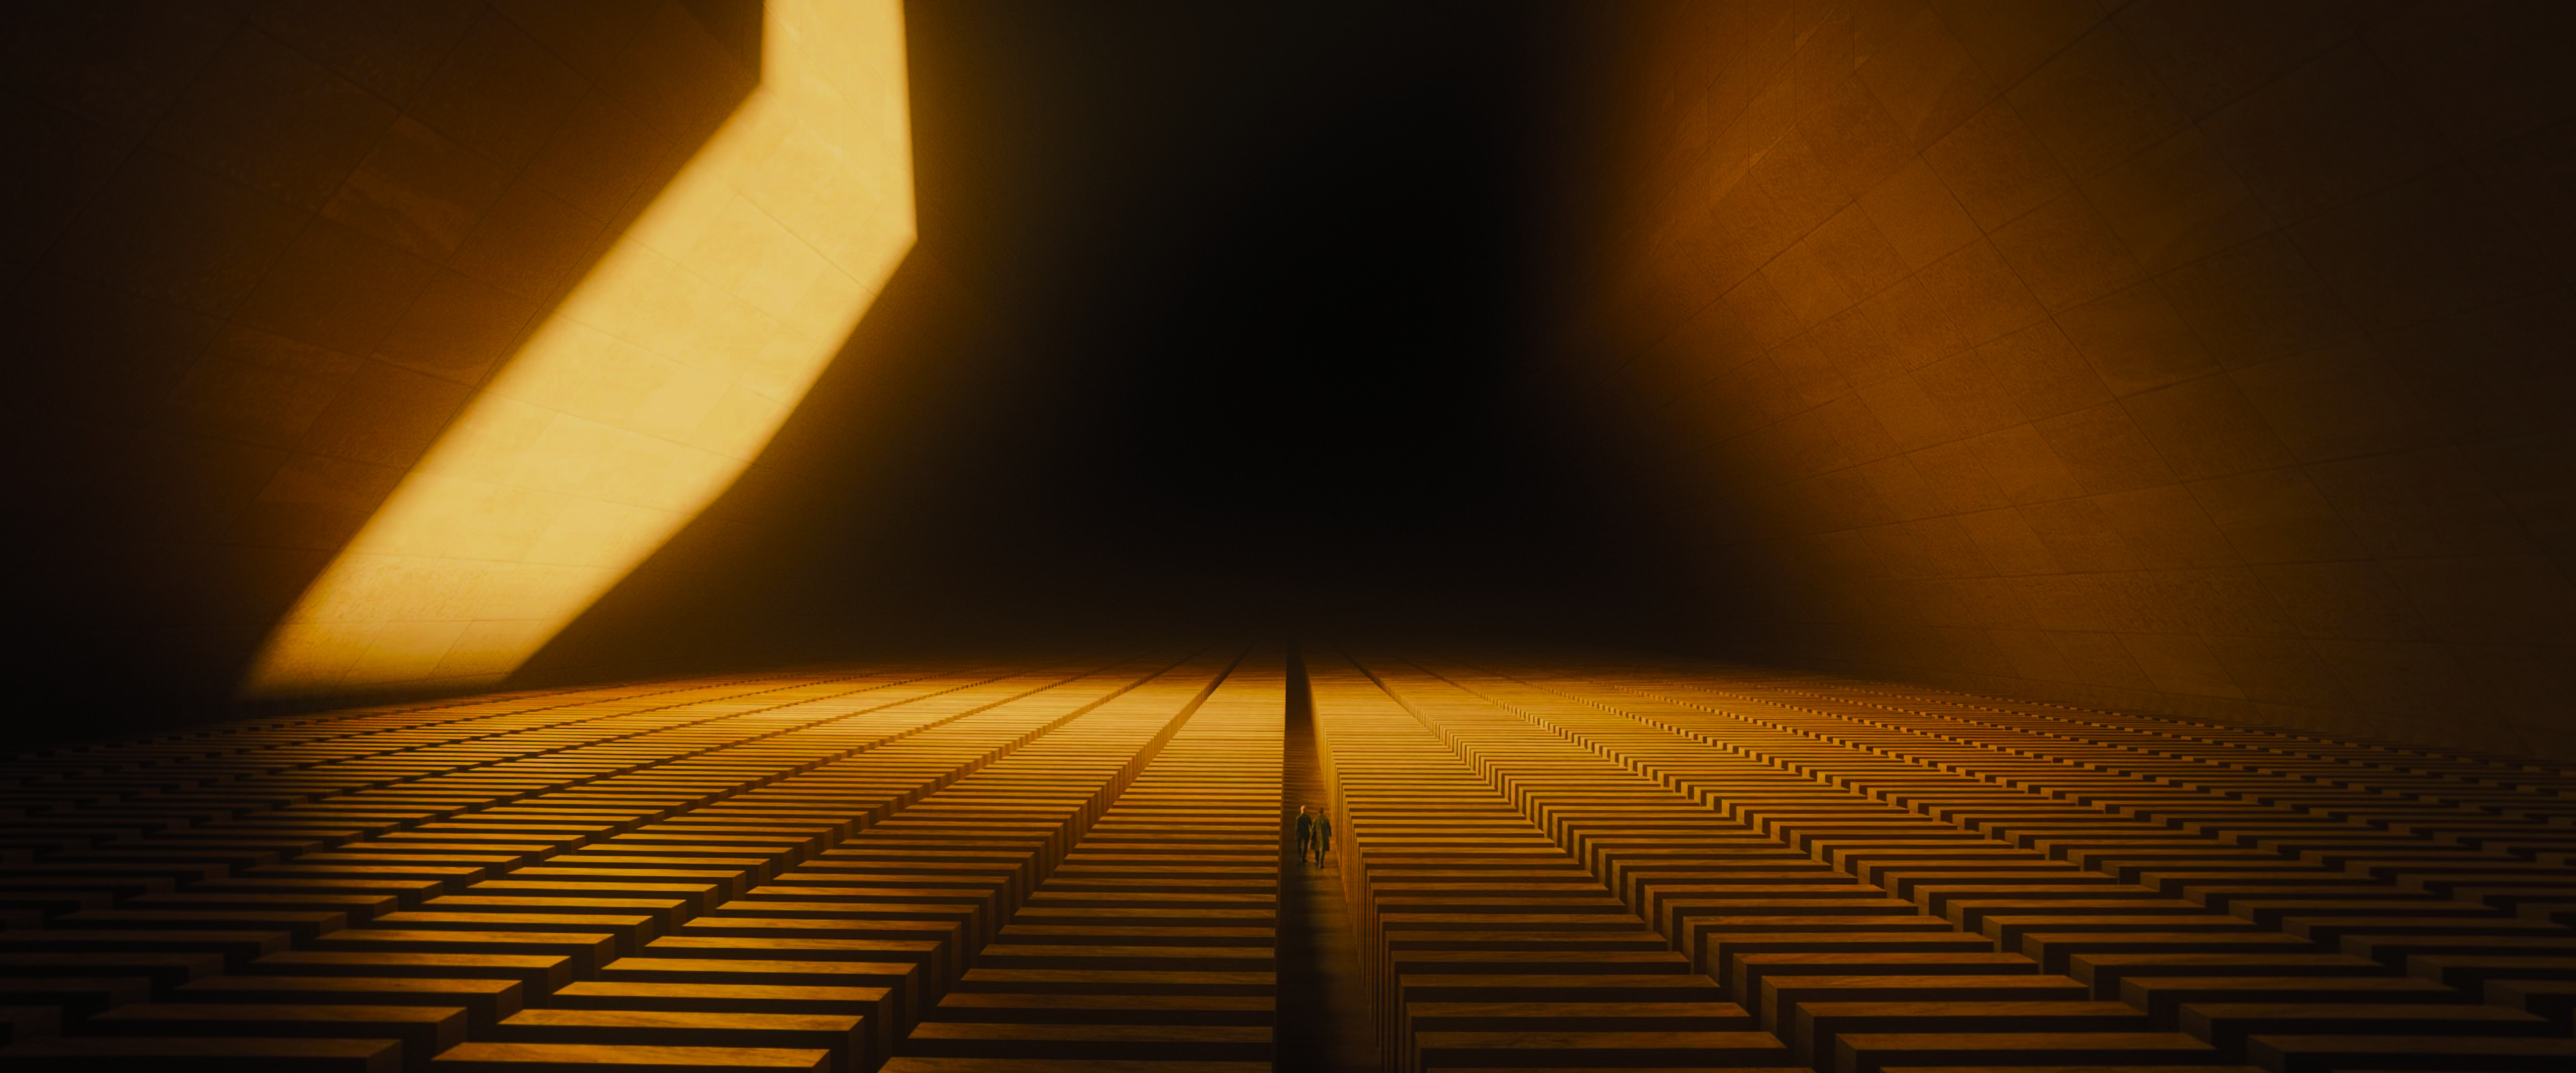 Blade Runner 2049 wallpaper, 4K resolution, Mind-bending visuals, Reality is my mind, 3840x1600 Dual Screen Desktop